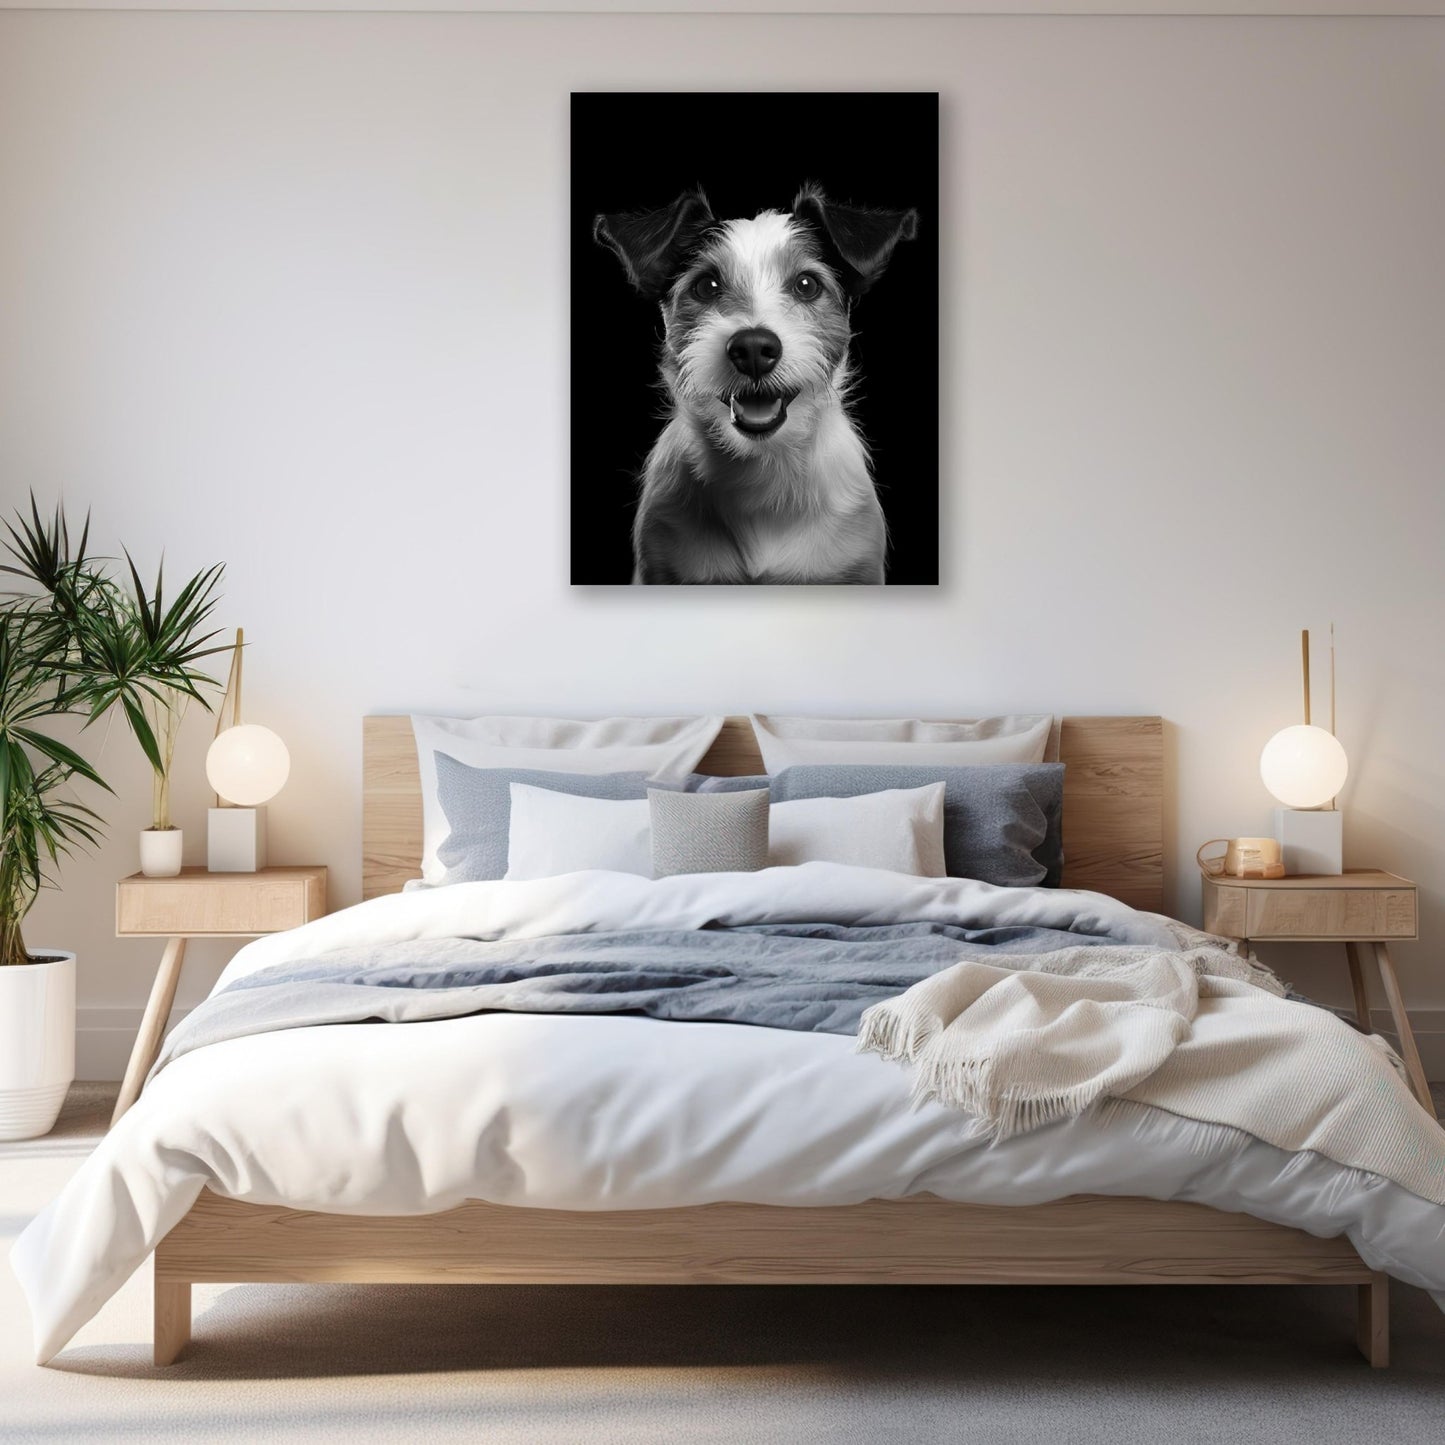 Dog - Jack Russel Terrier Portrait - Atka Inspirations